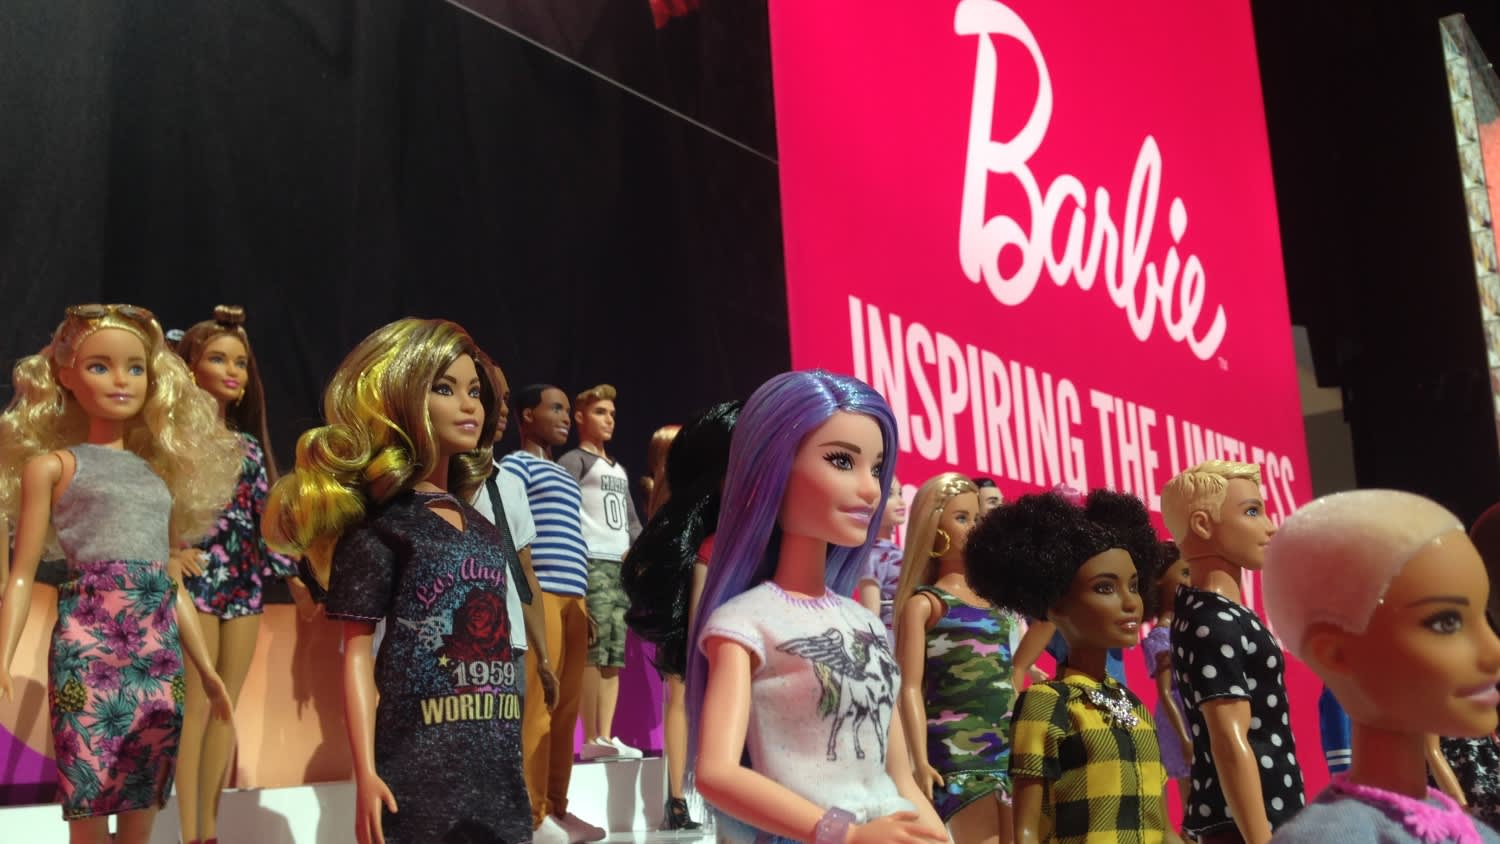 bts barbie dolls price